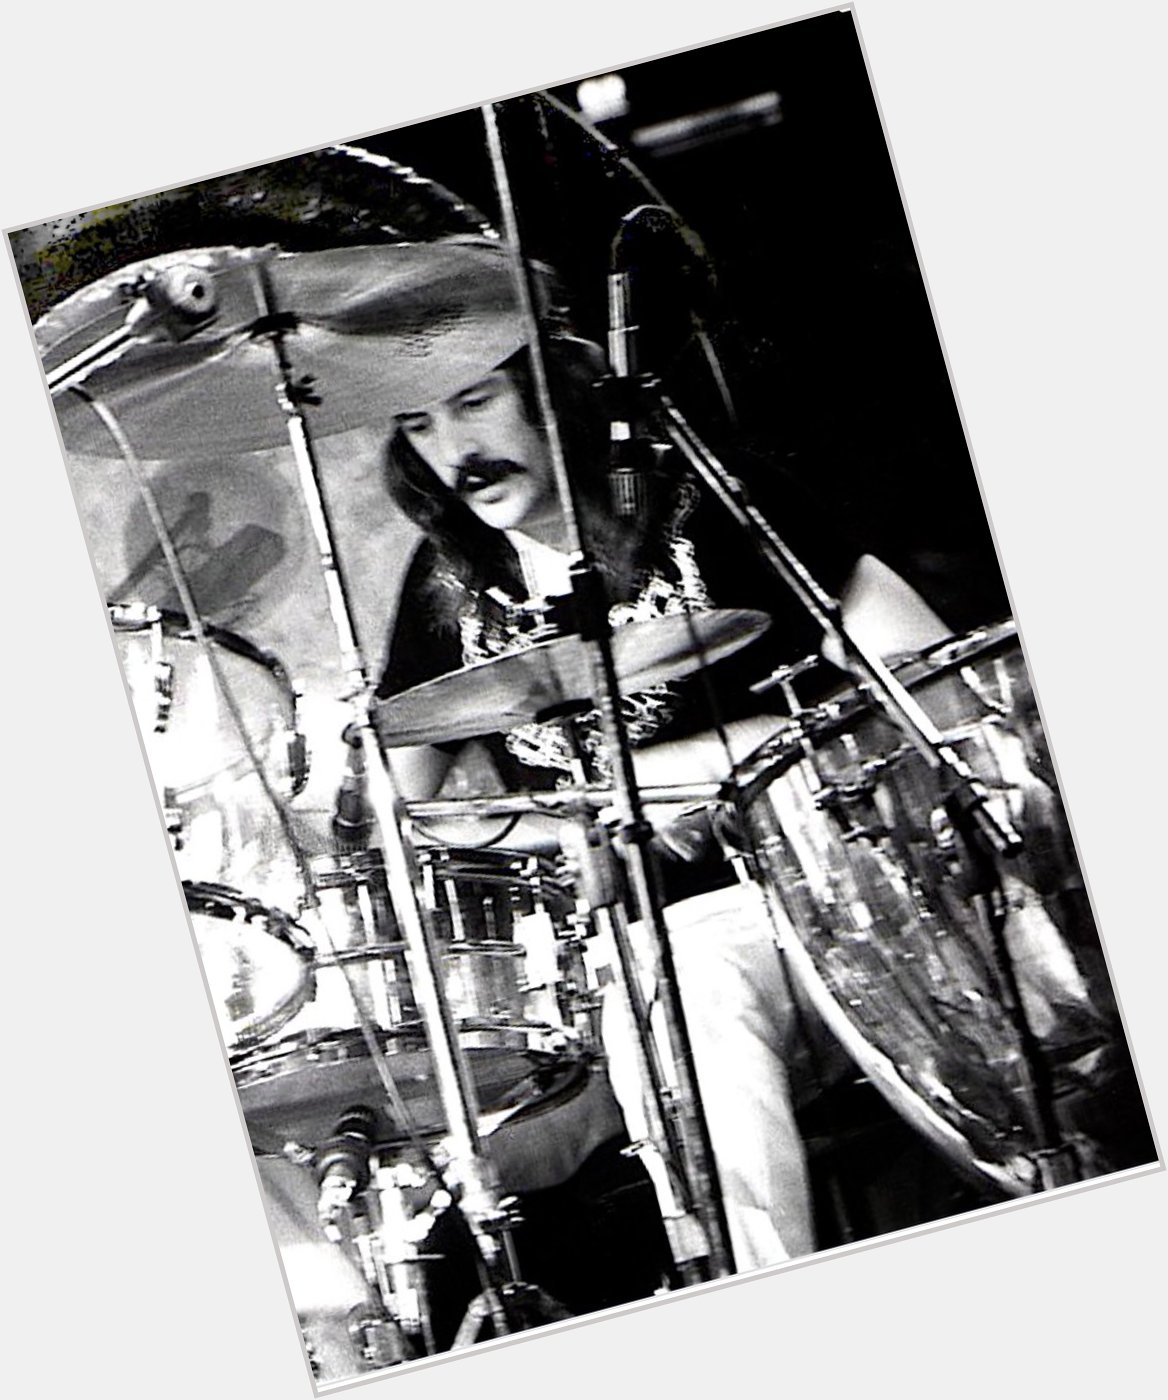 Happy Birthday to the late, great John Bonham of Led Zeppelin. 